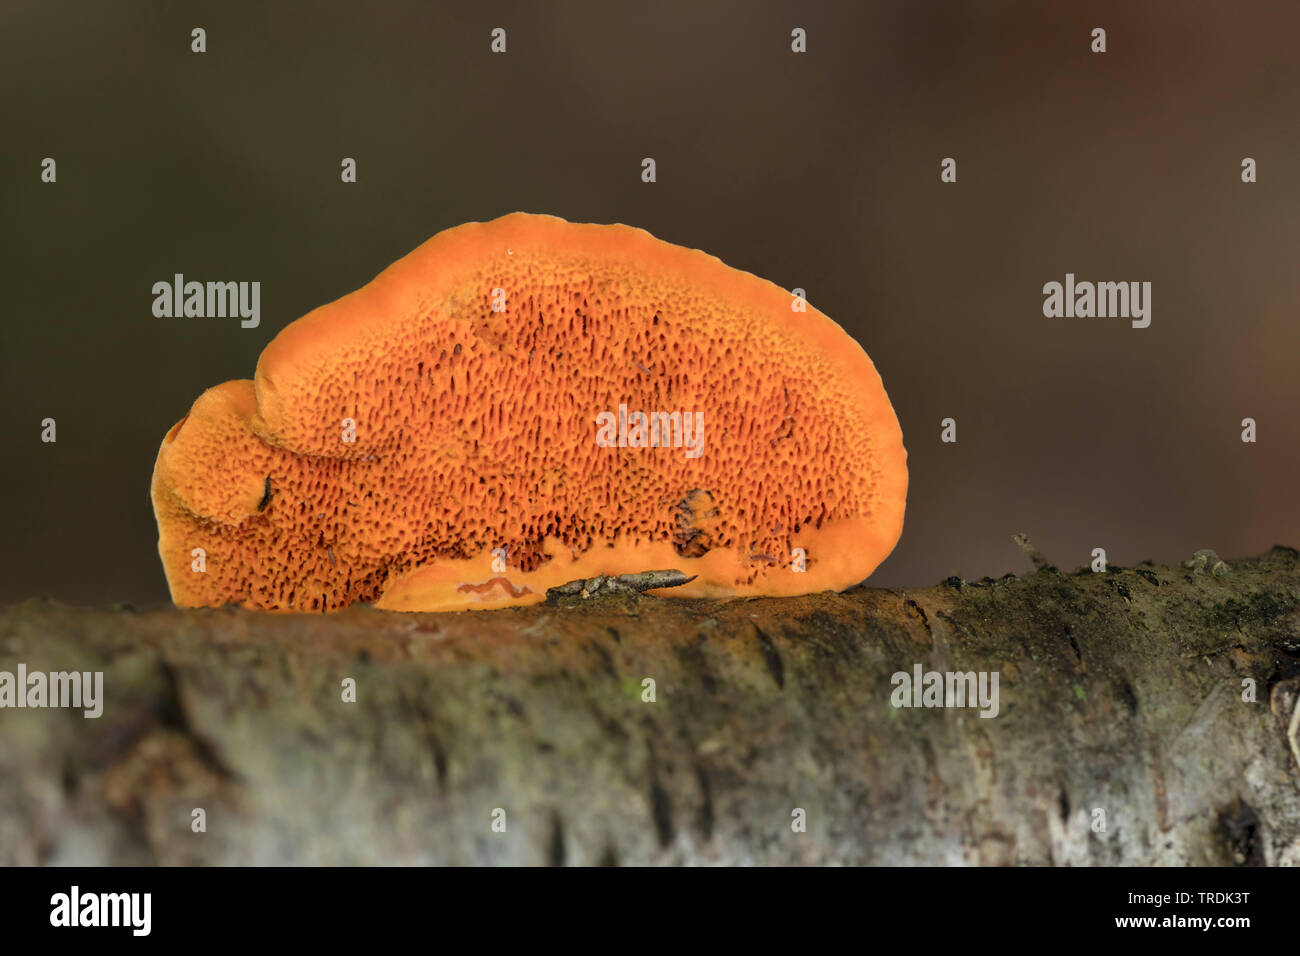 Le cinabre polypore (Pycnoporus cinnabarinus), sur le bois mort, Pays-Bas Banque D'Images